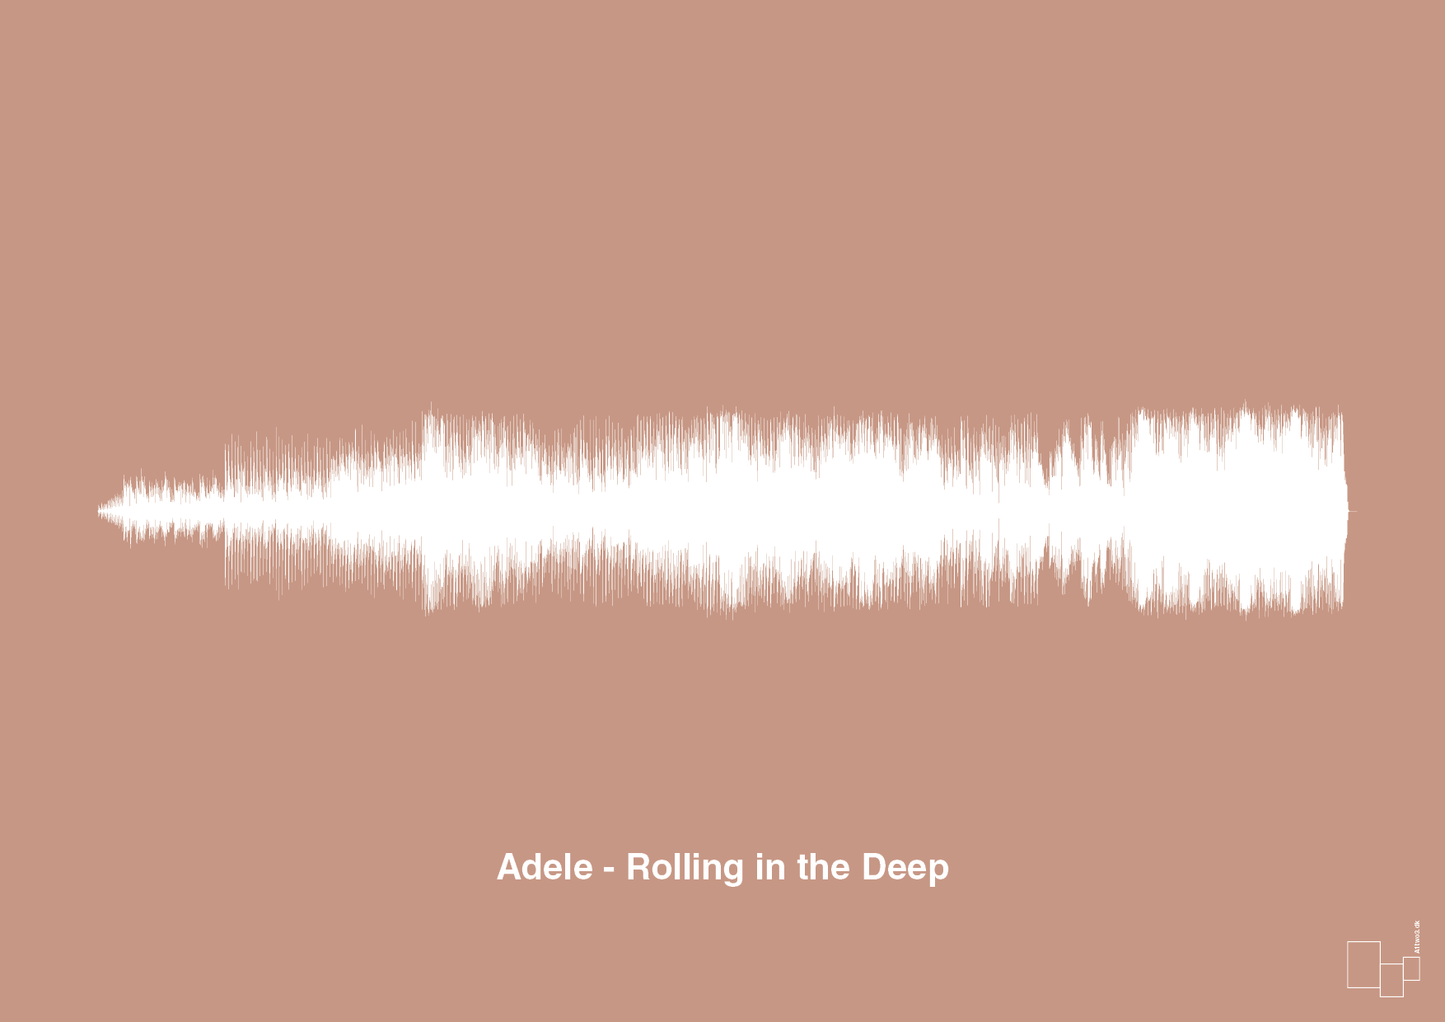 adele - rolling in the deep - Plakat med Musik i Powder